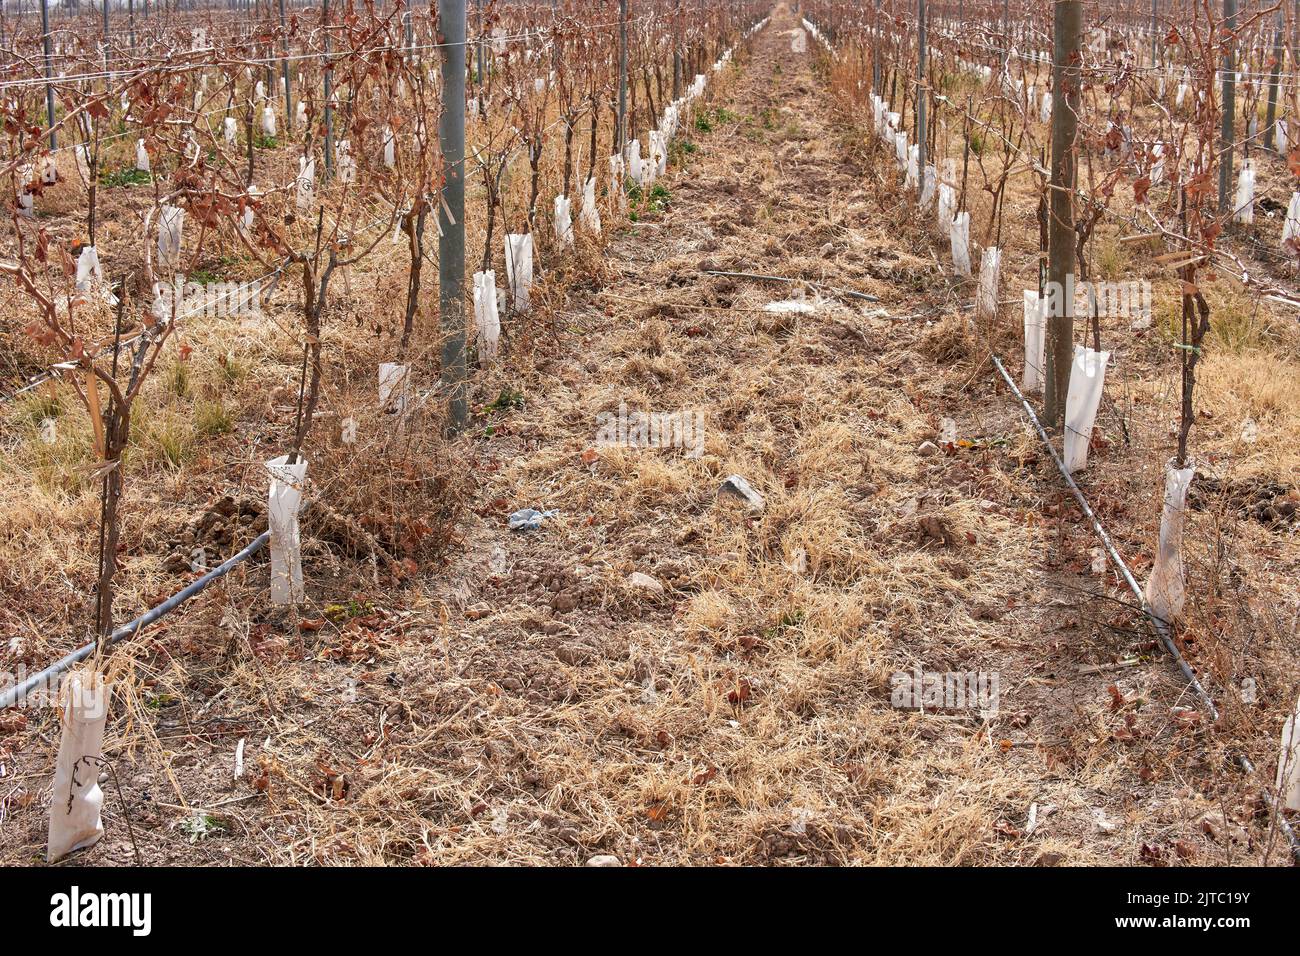 A dry vineyard in Mendoza, Argentina during winter season. Stock Photo